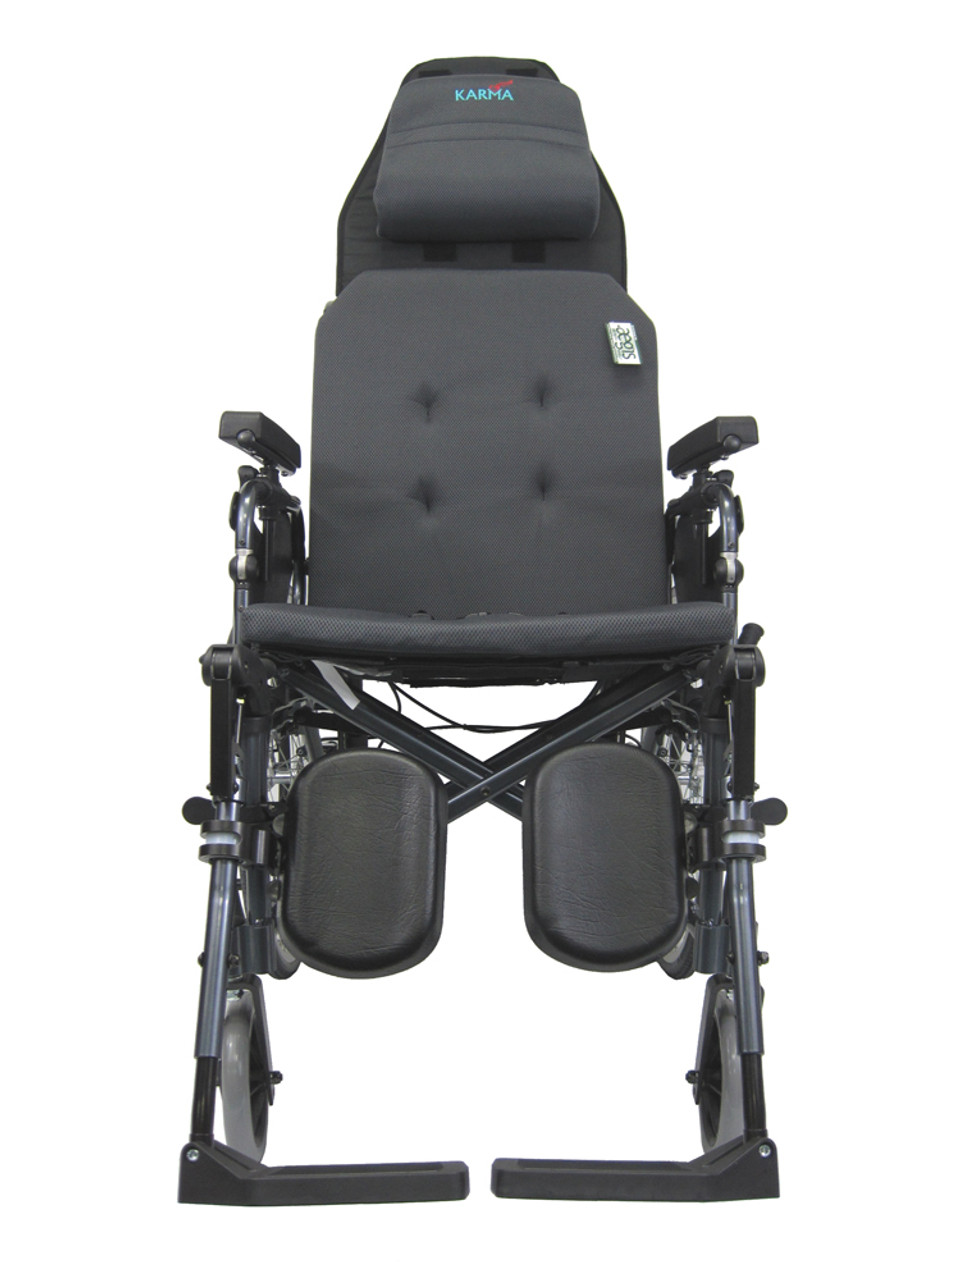 MVP-502 Wheelchair by Karman Healthcare